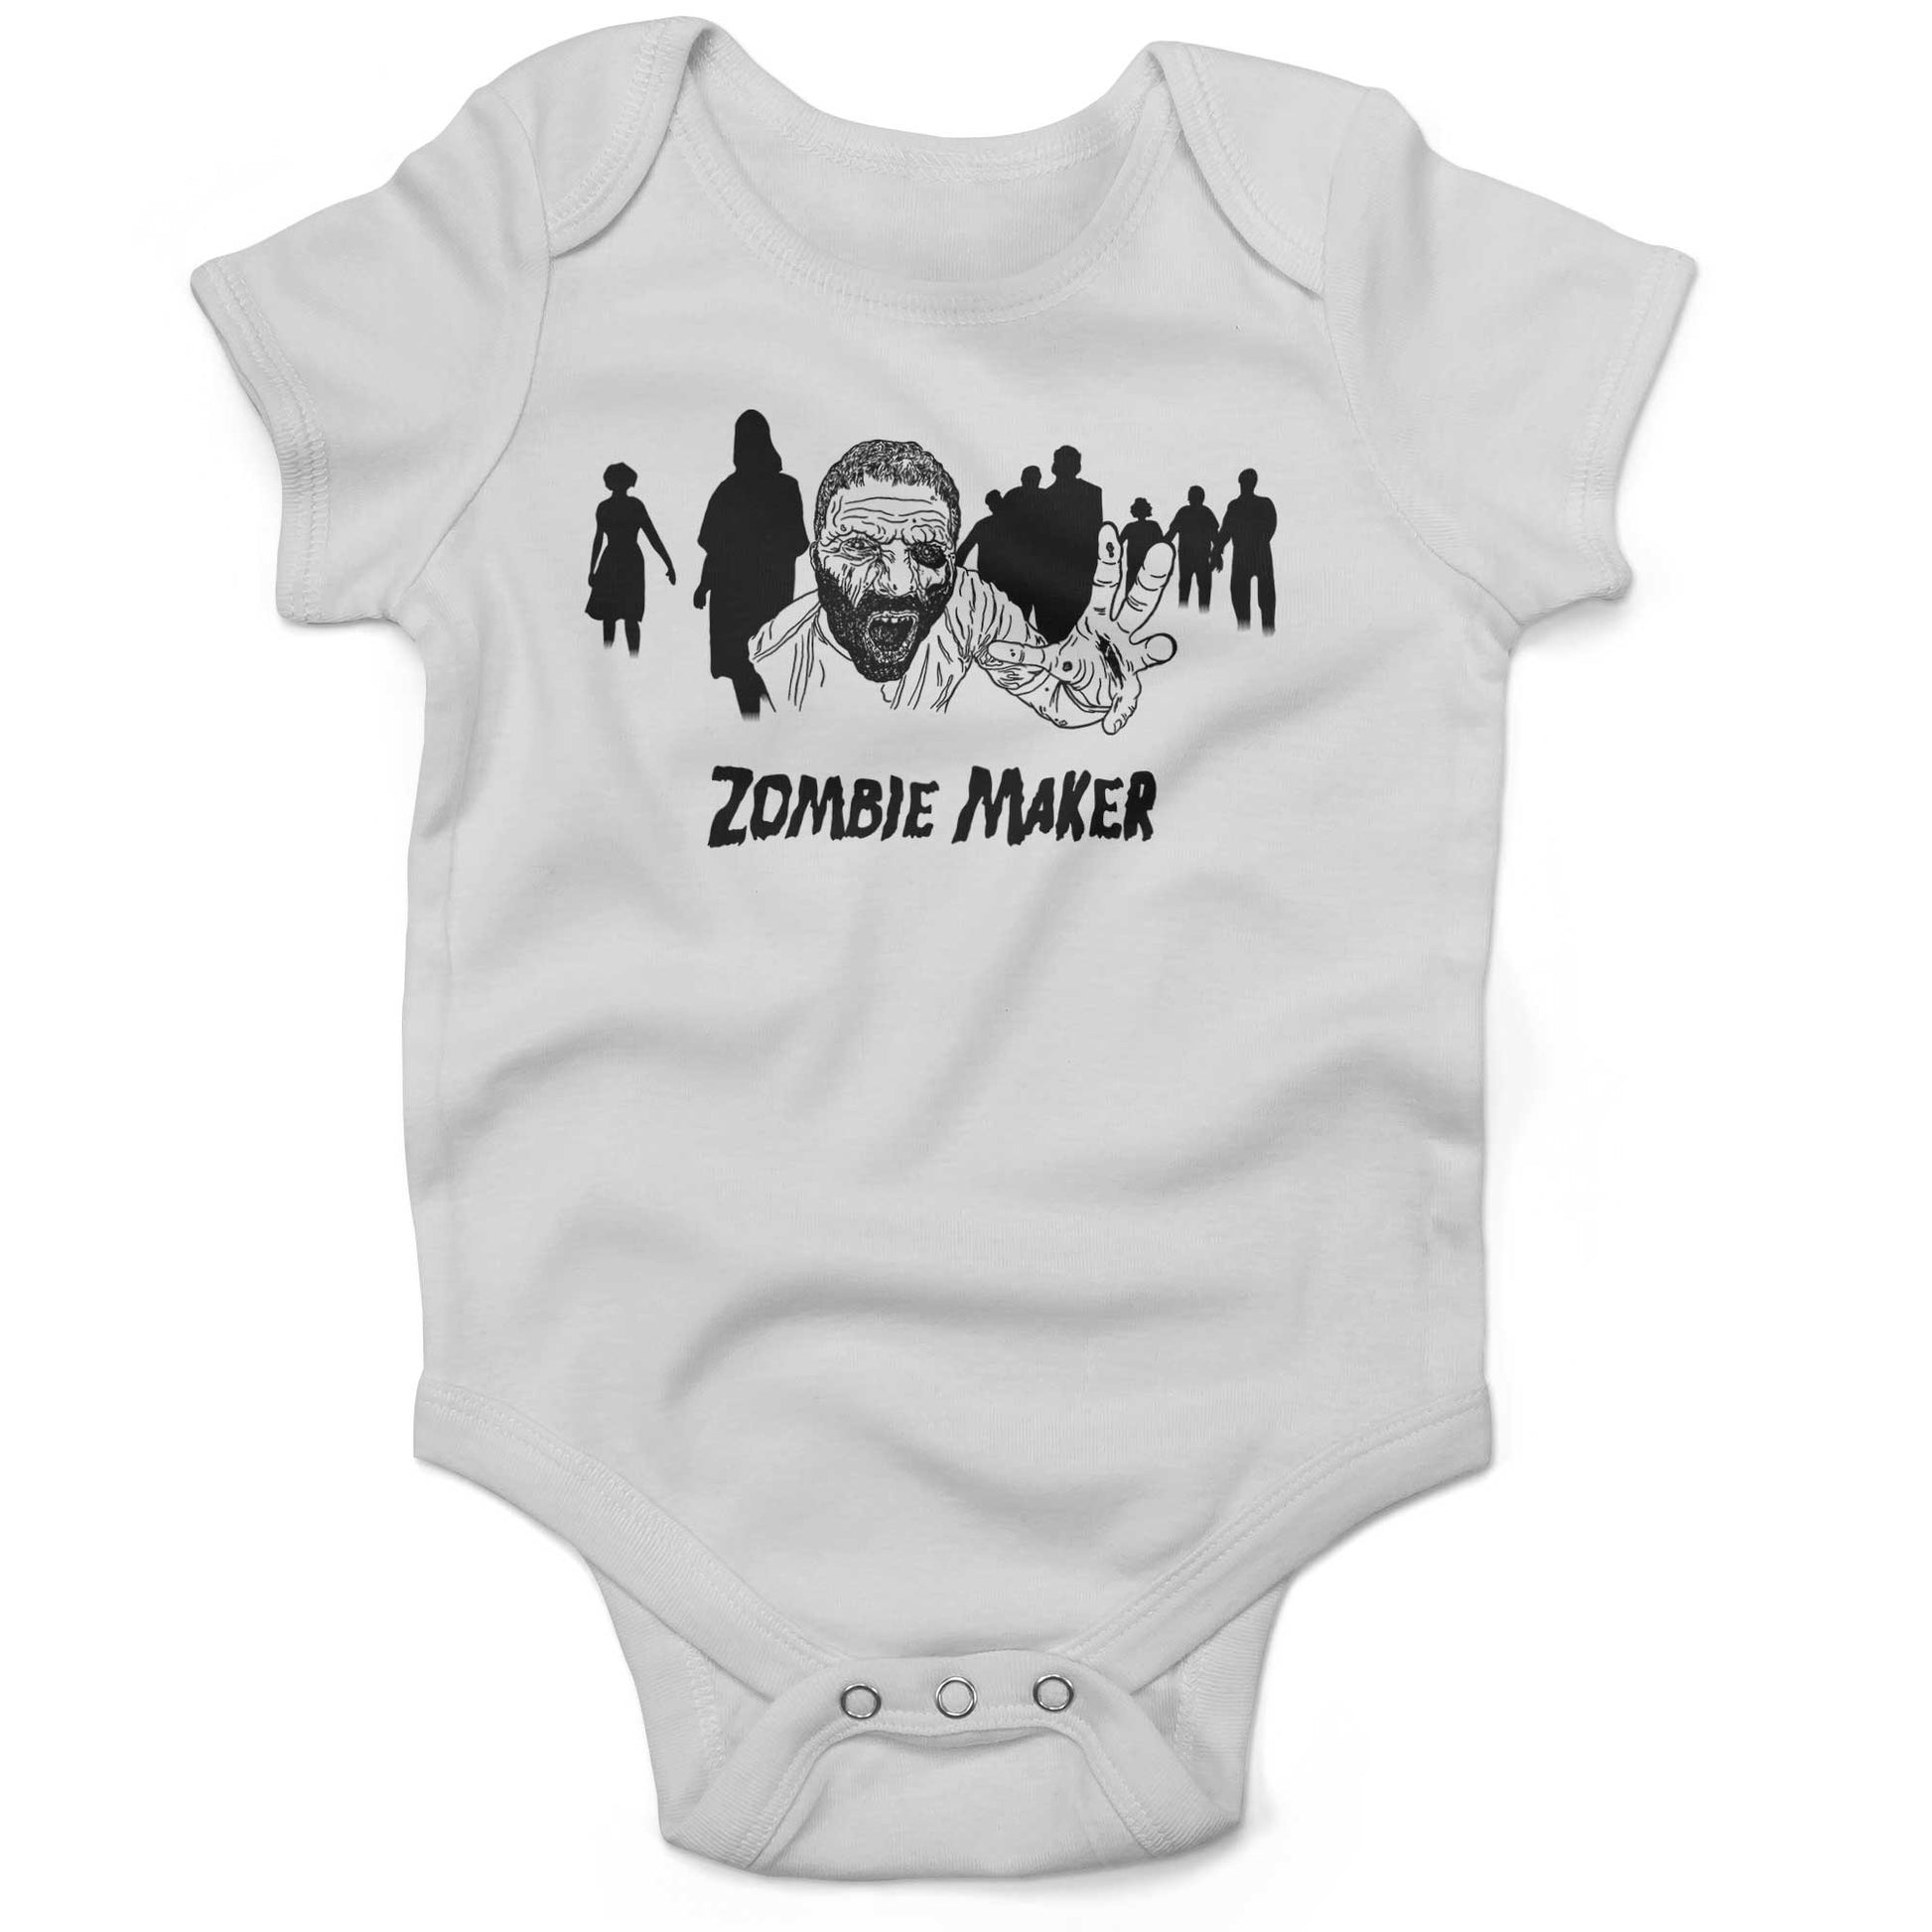 Zombie Maker Infant Bodysuit or Raglan Baby Tee-White-3-6 months